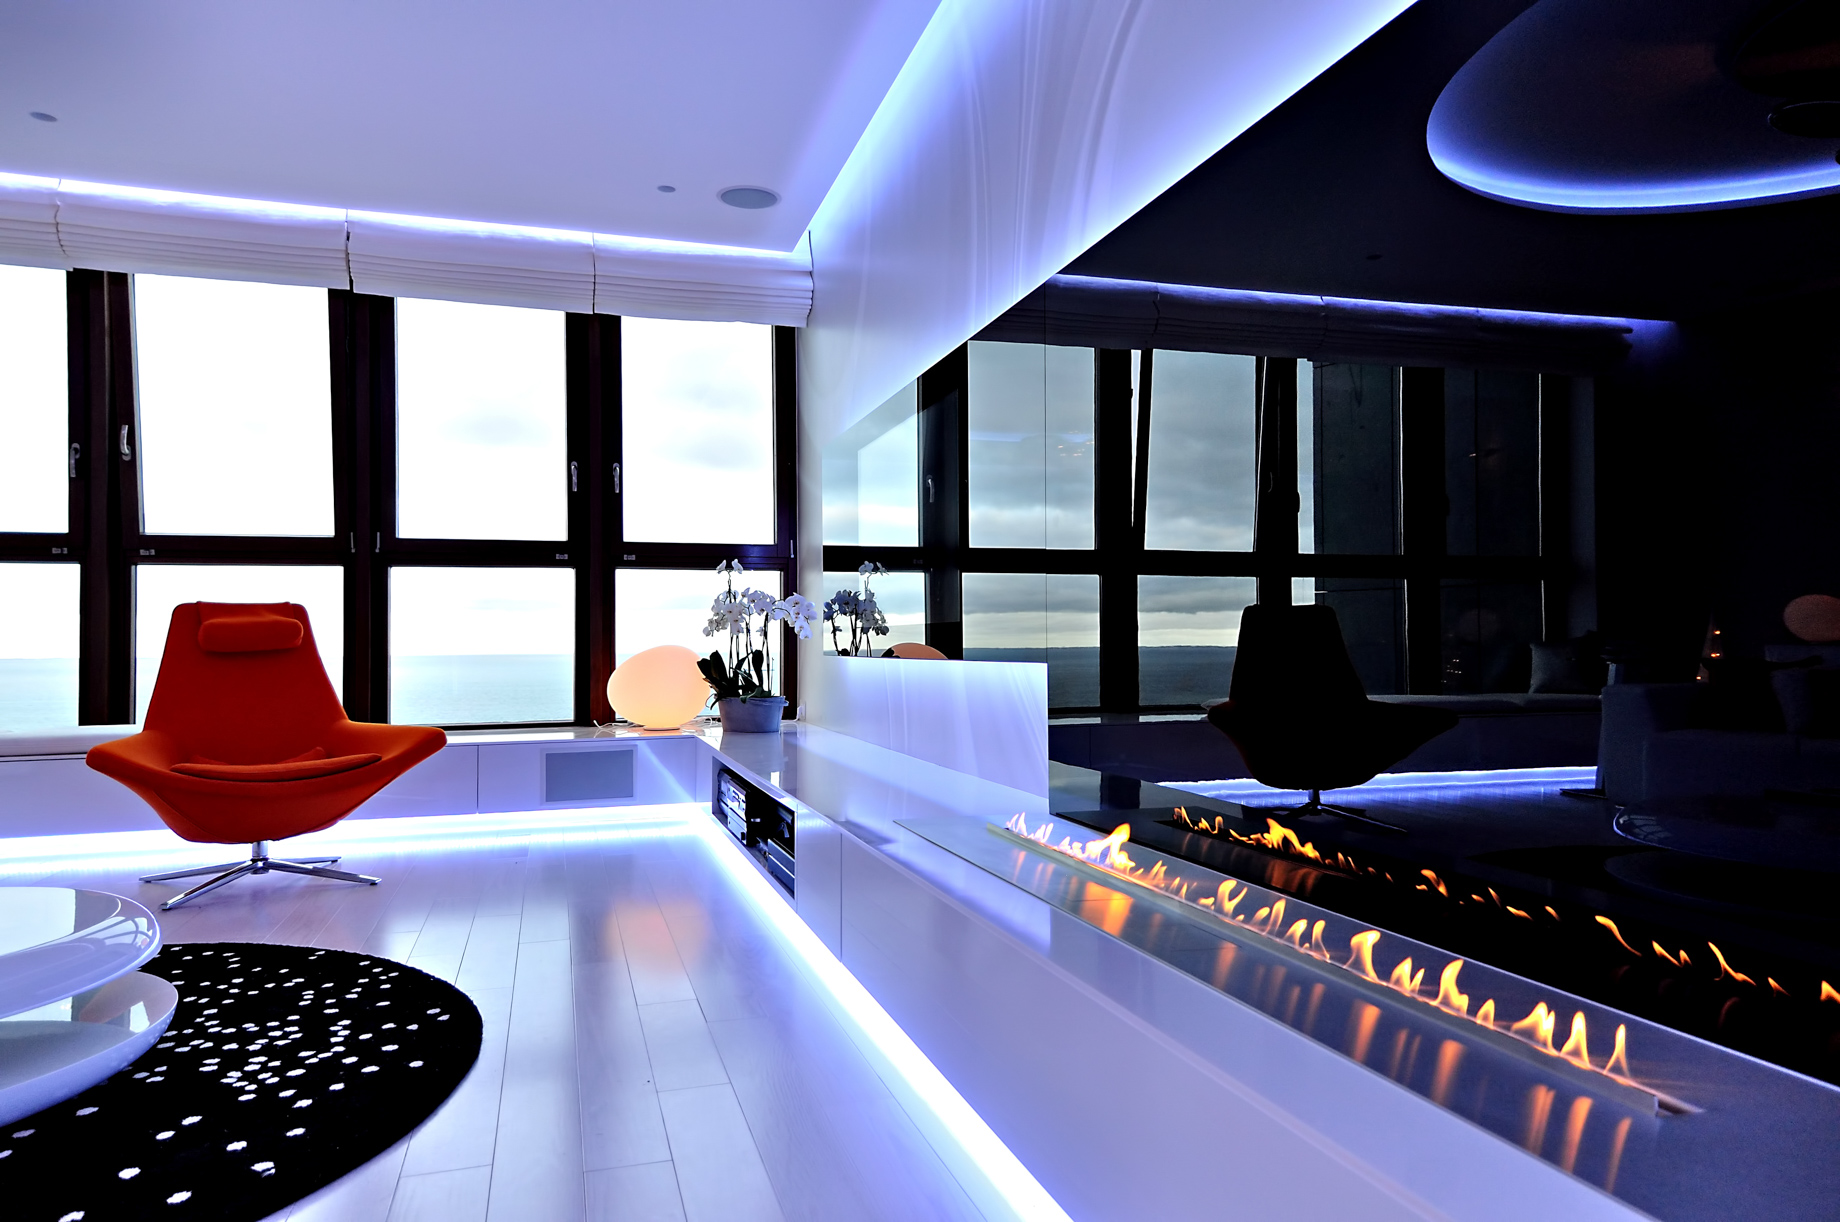 Sea Towers Luxury Apartment - Gdynia, Poland